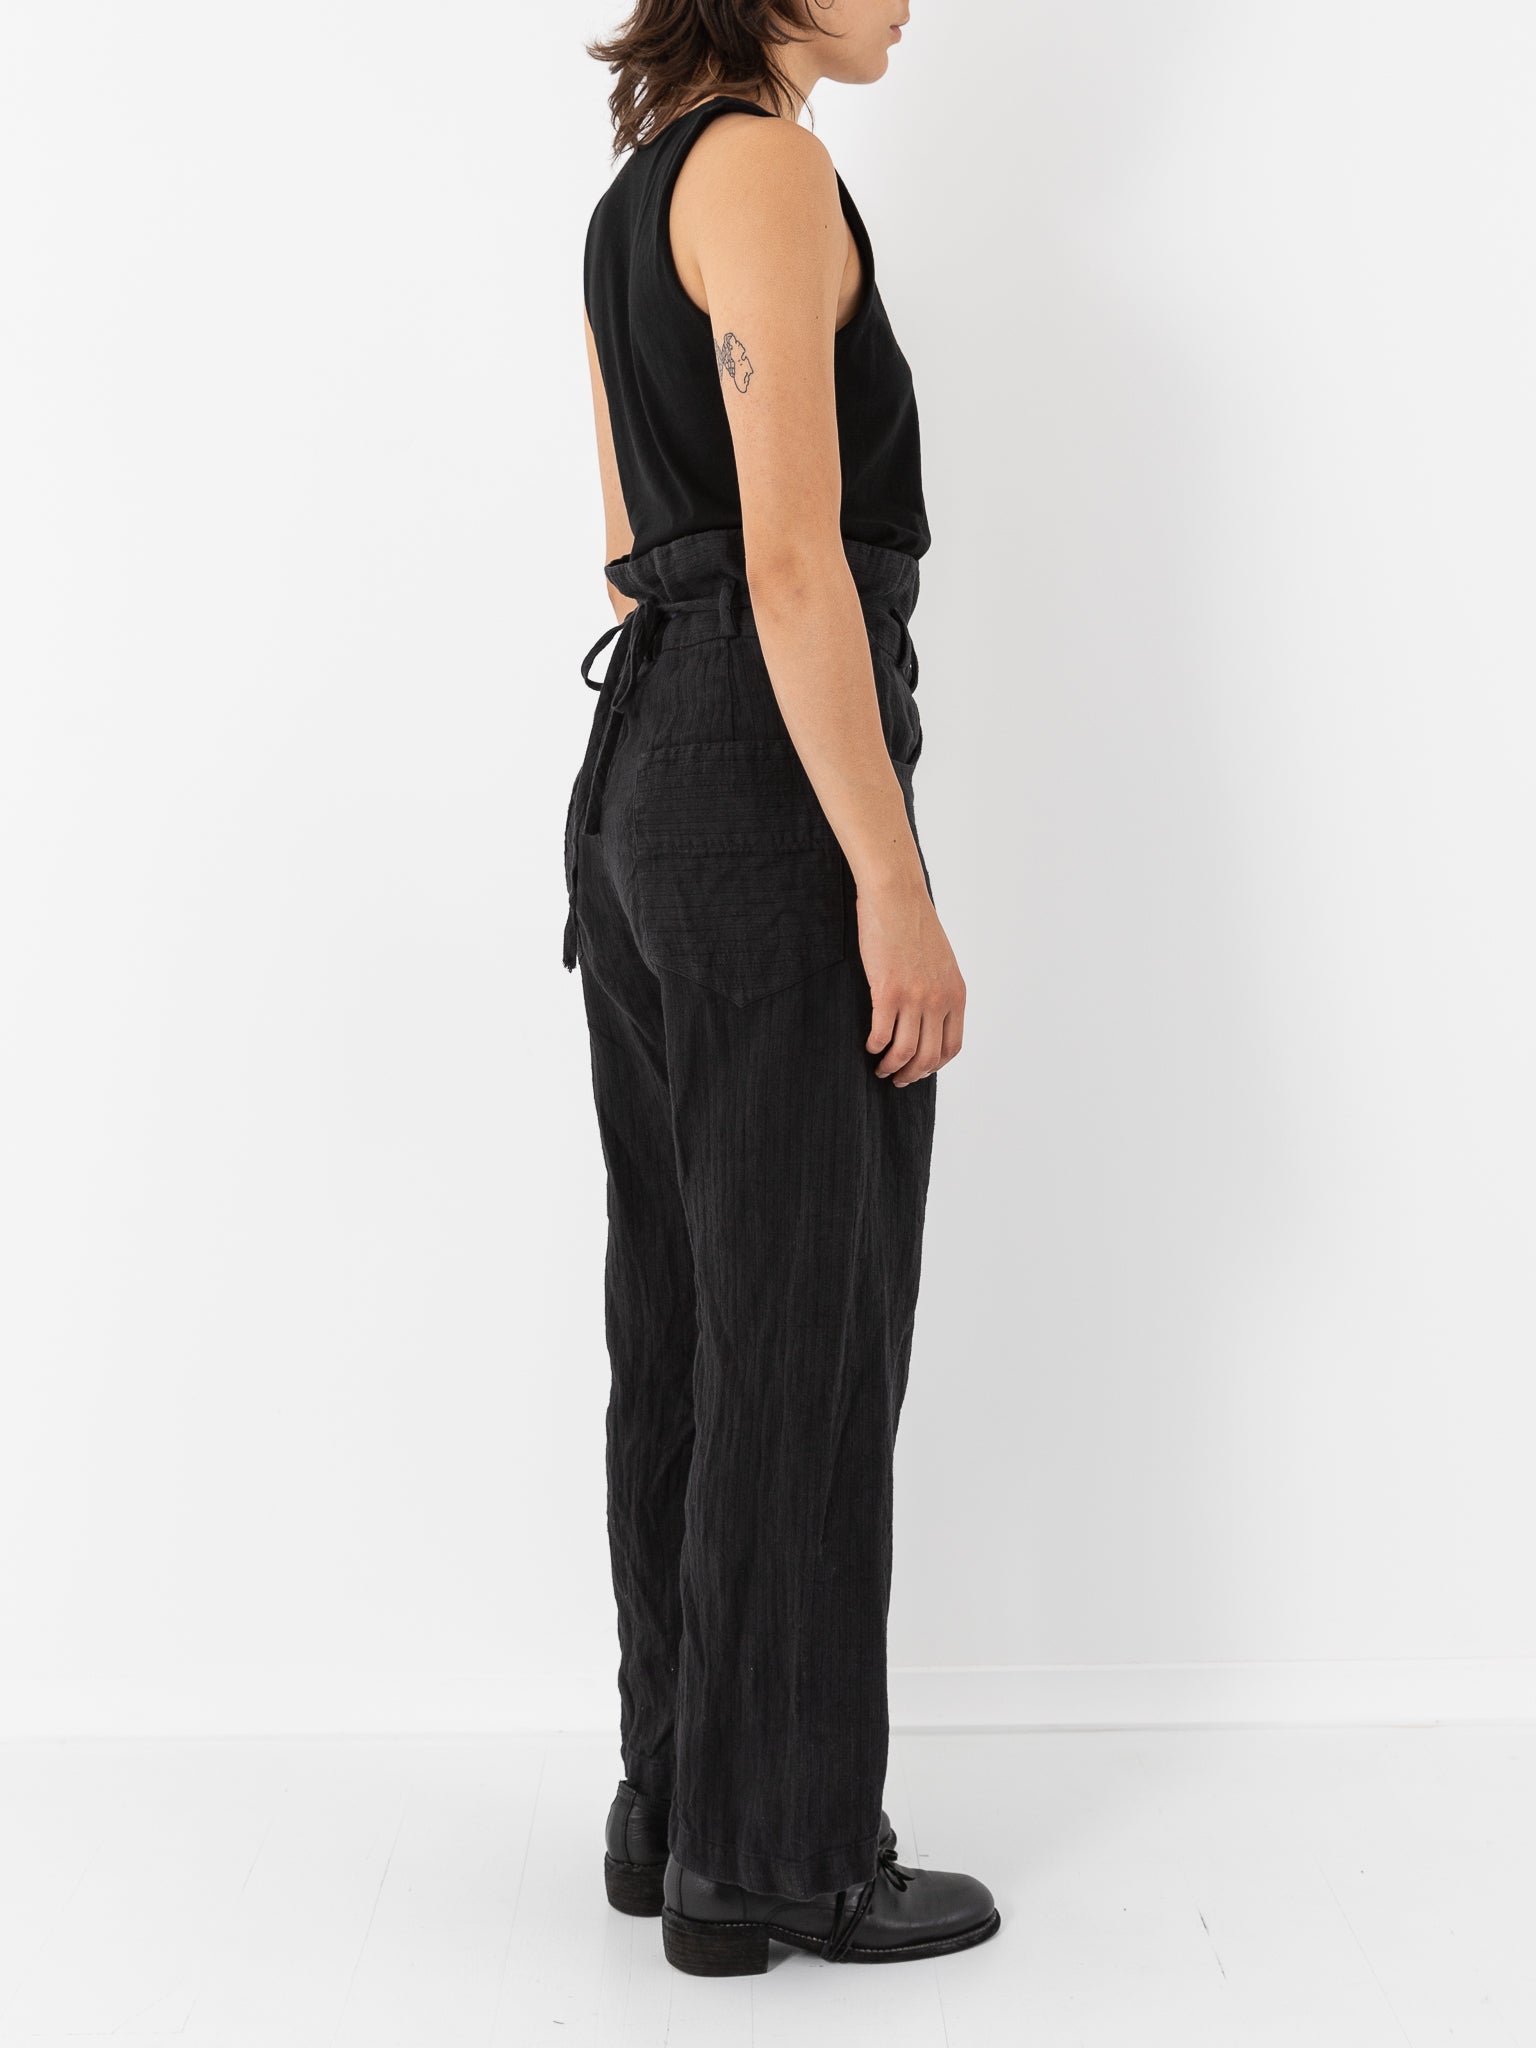 Atelier Suppan High Waist Trouser, Black - Worthwhile